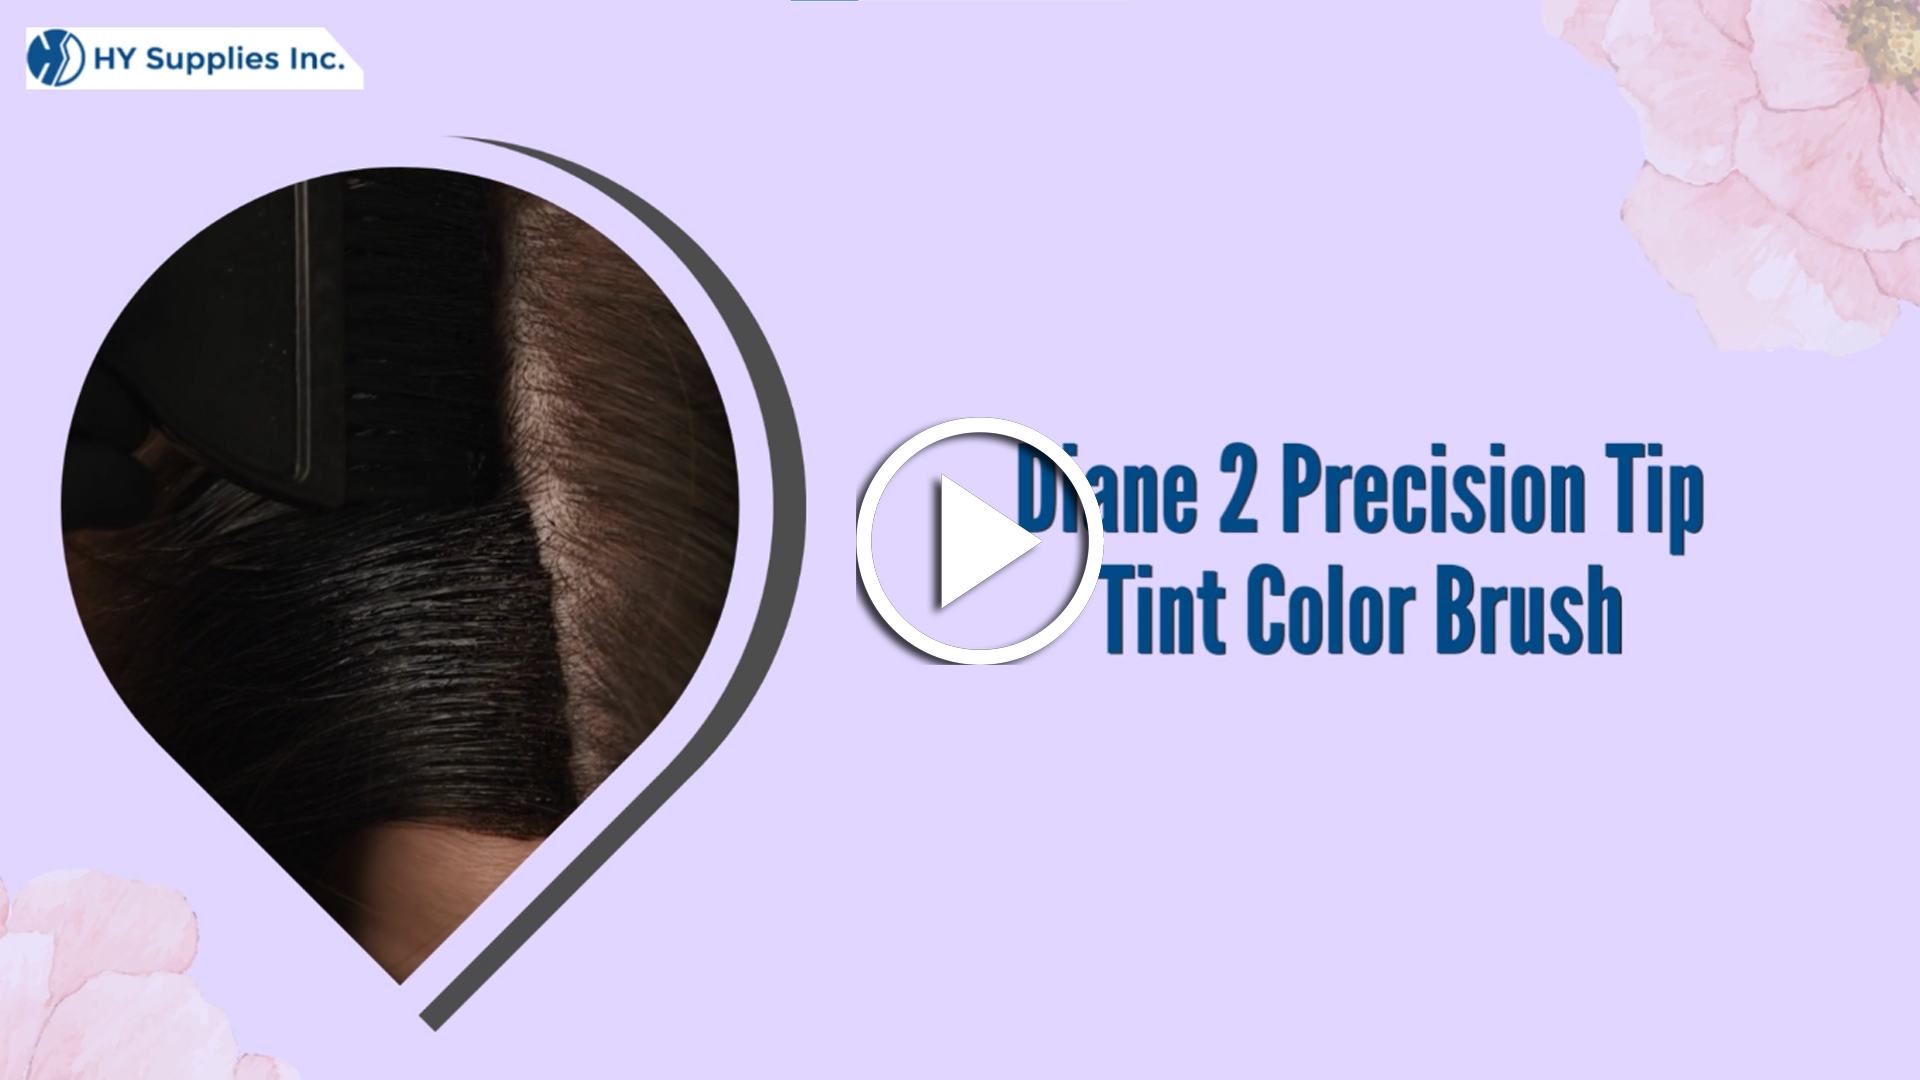 Diane 2 Precision Tip Tint ColorBrush